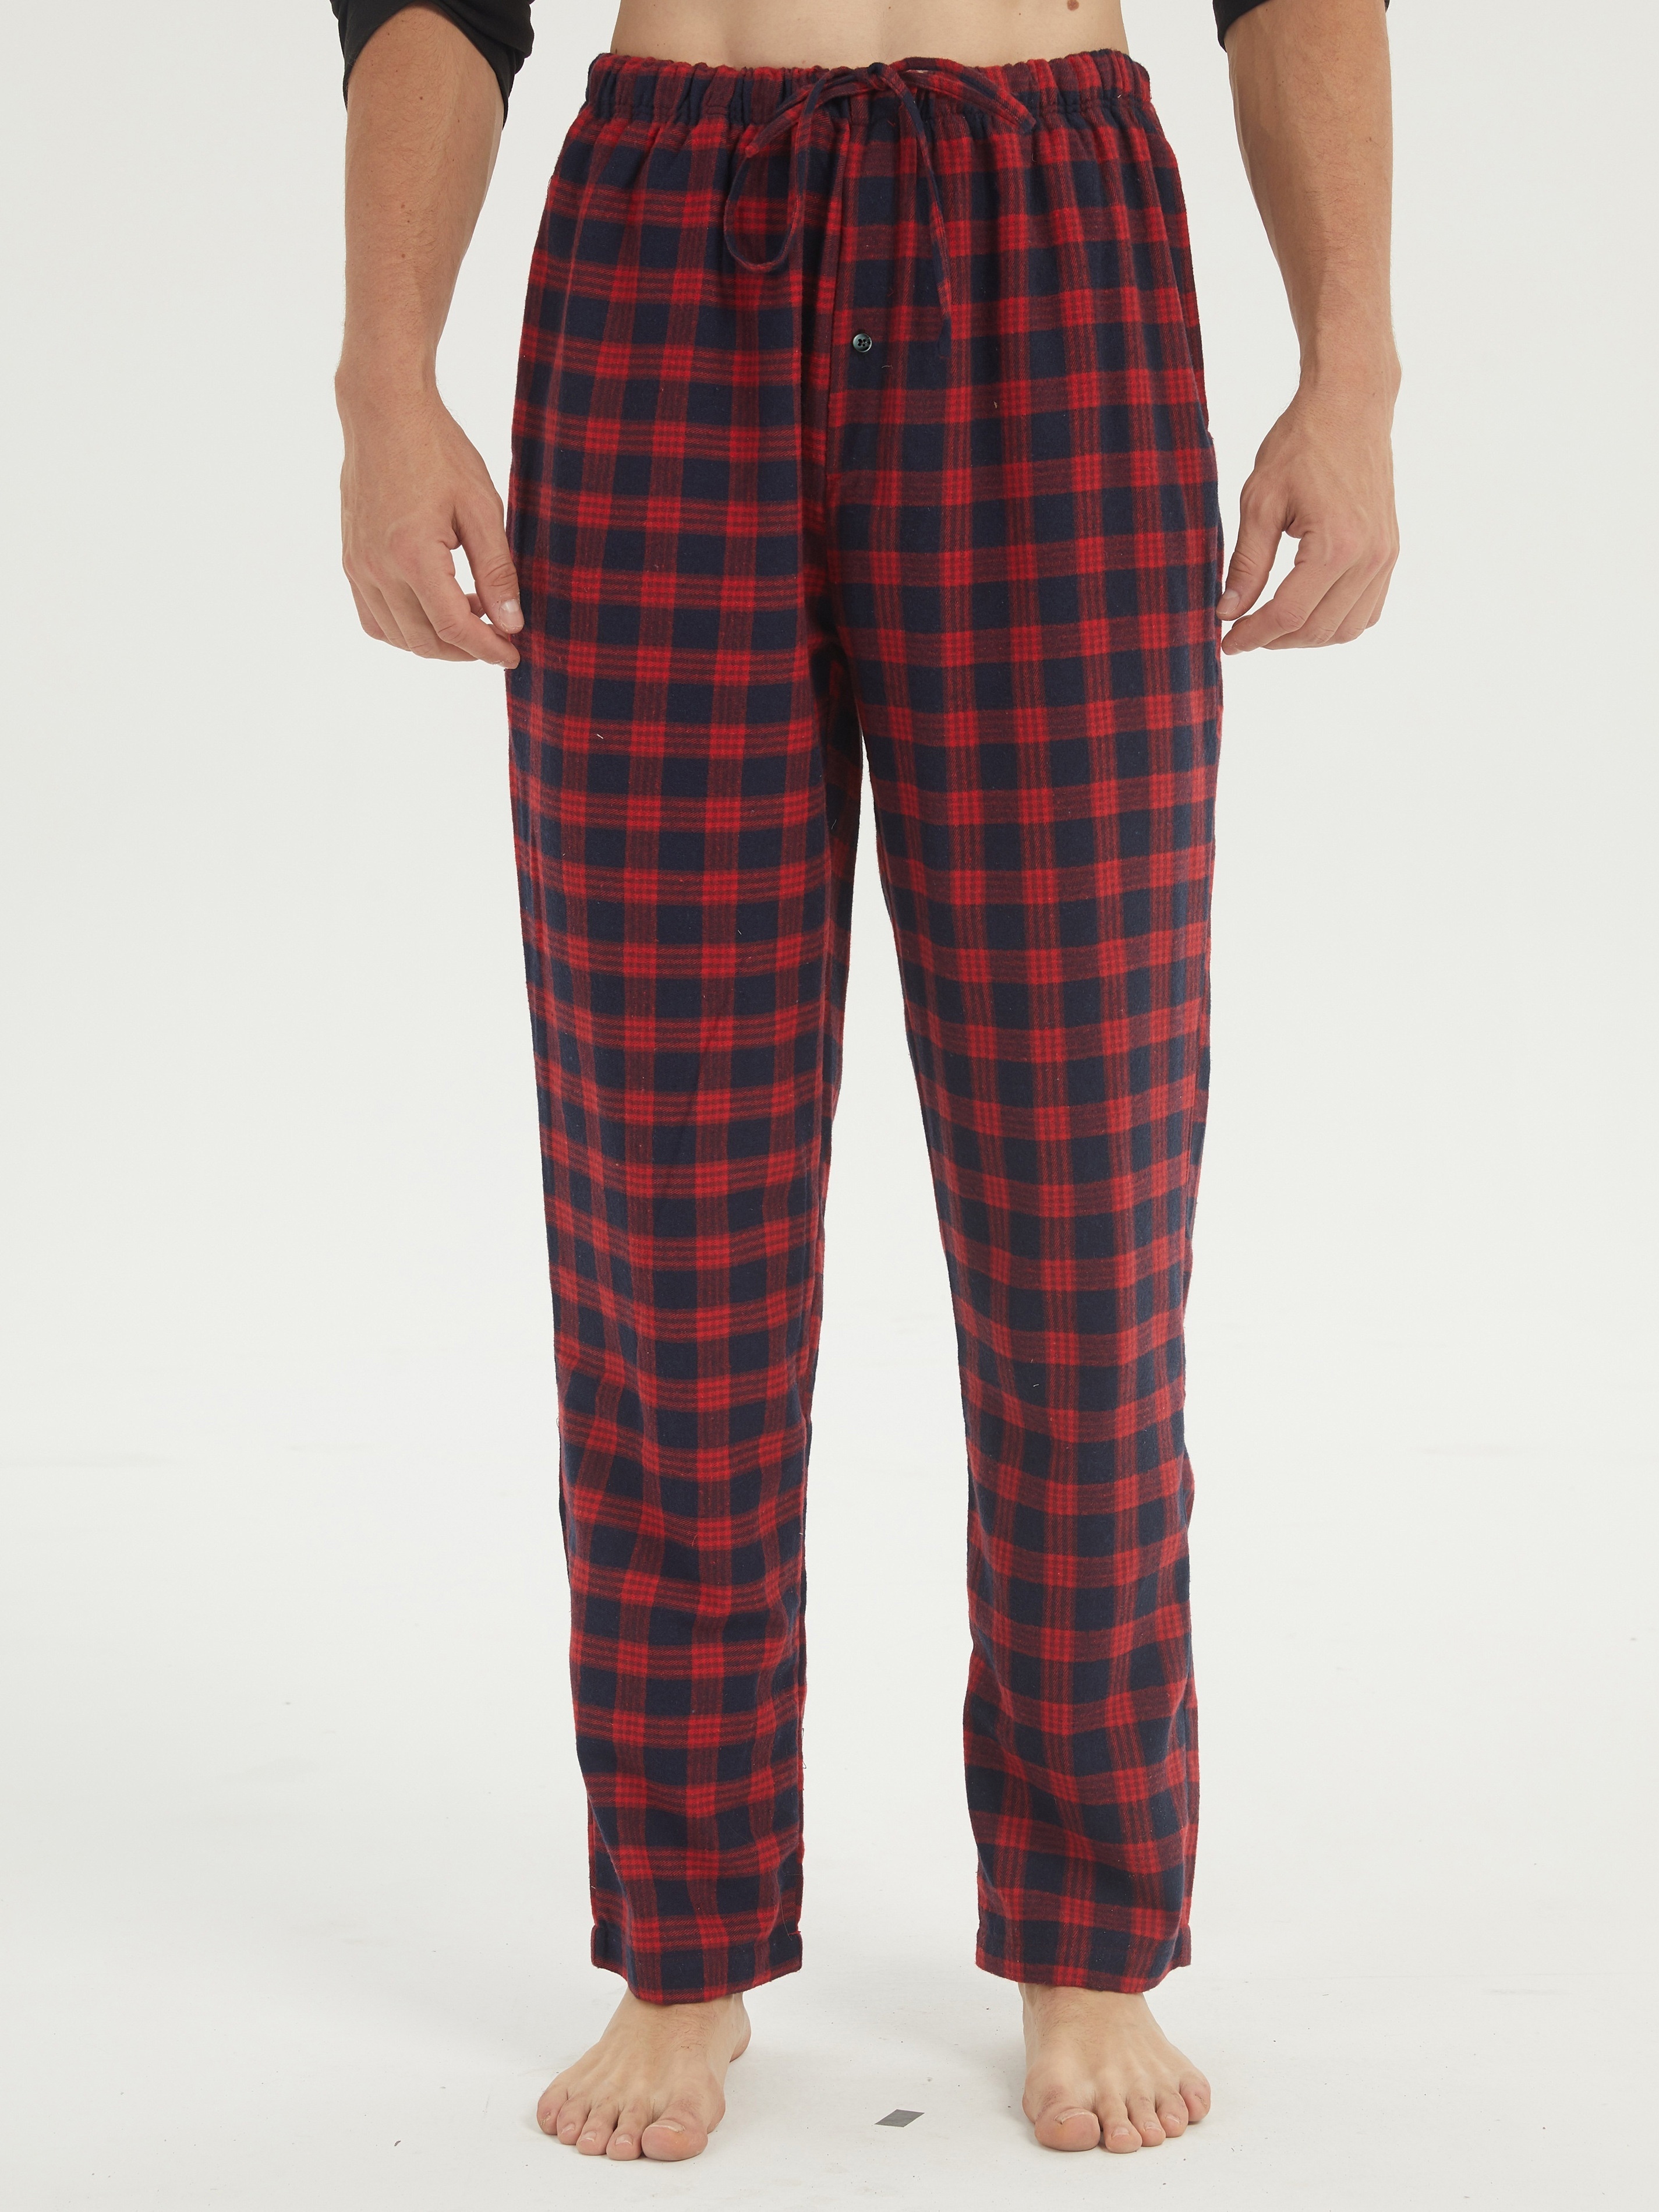 Women's Pajama Bottoms Cotton Plaid Lounge Pants Long Sleepwear